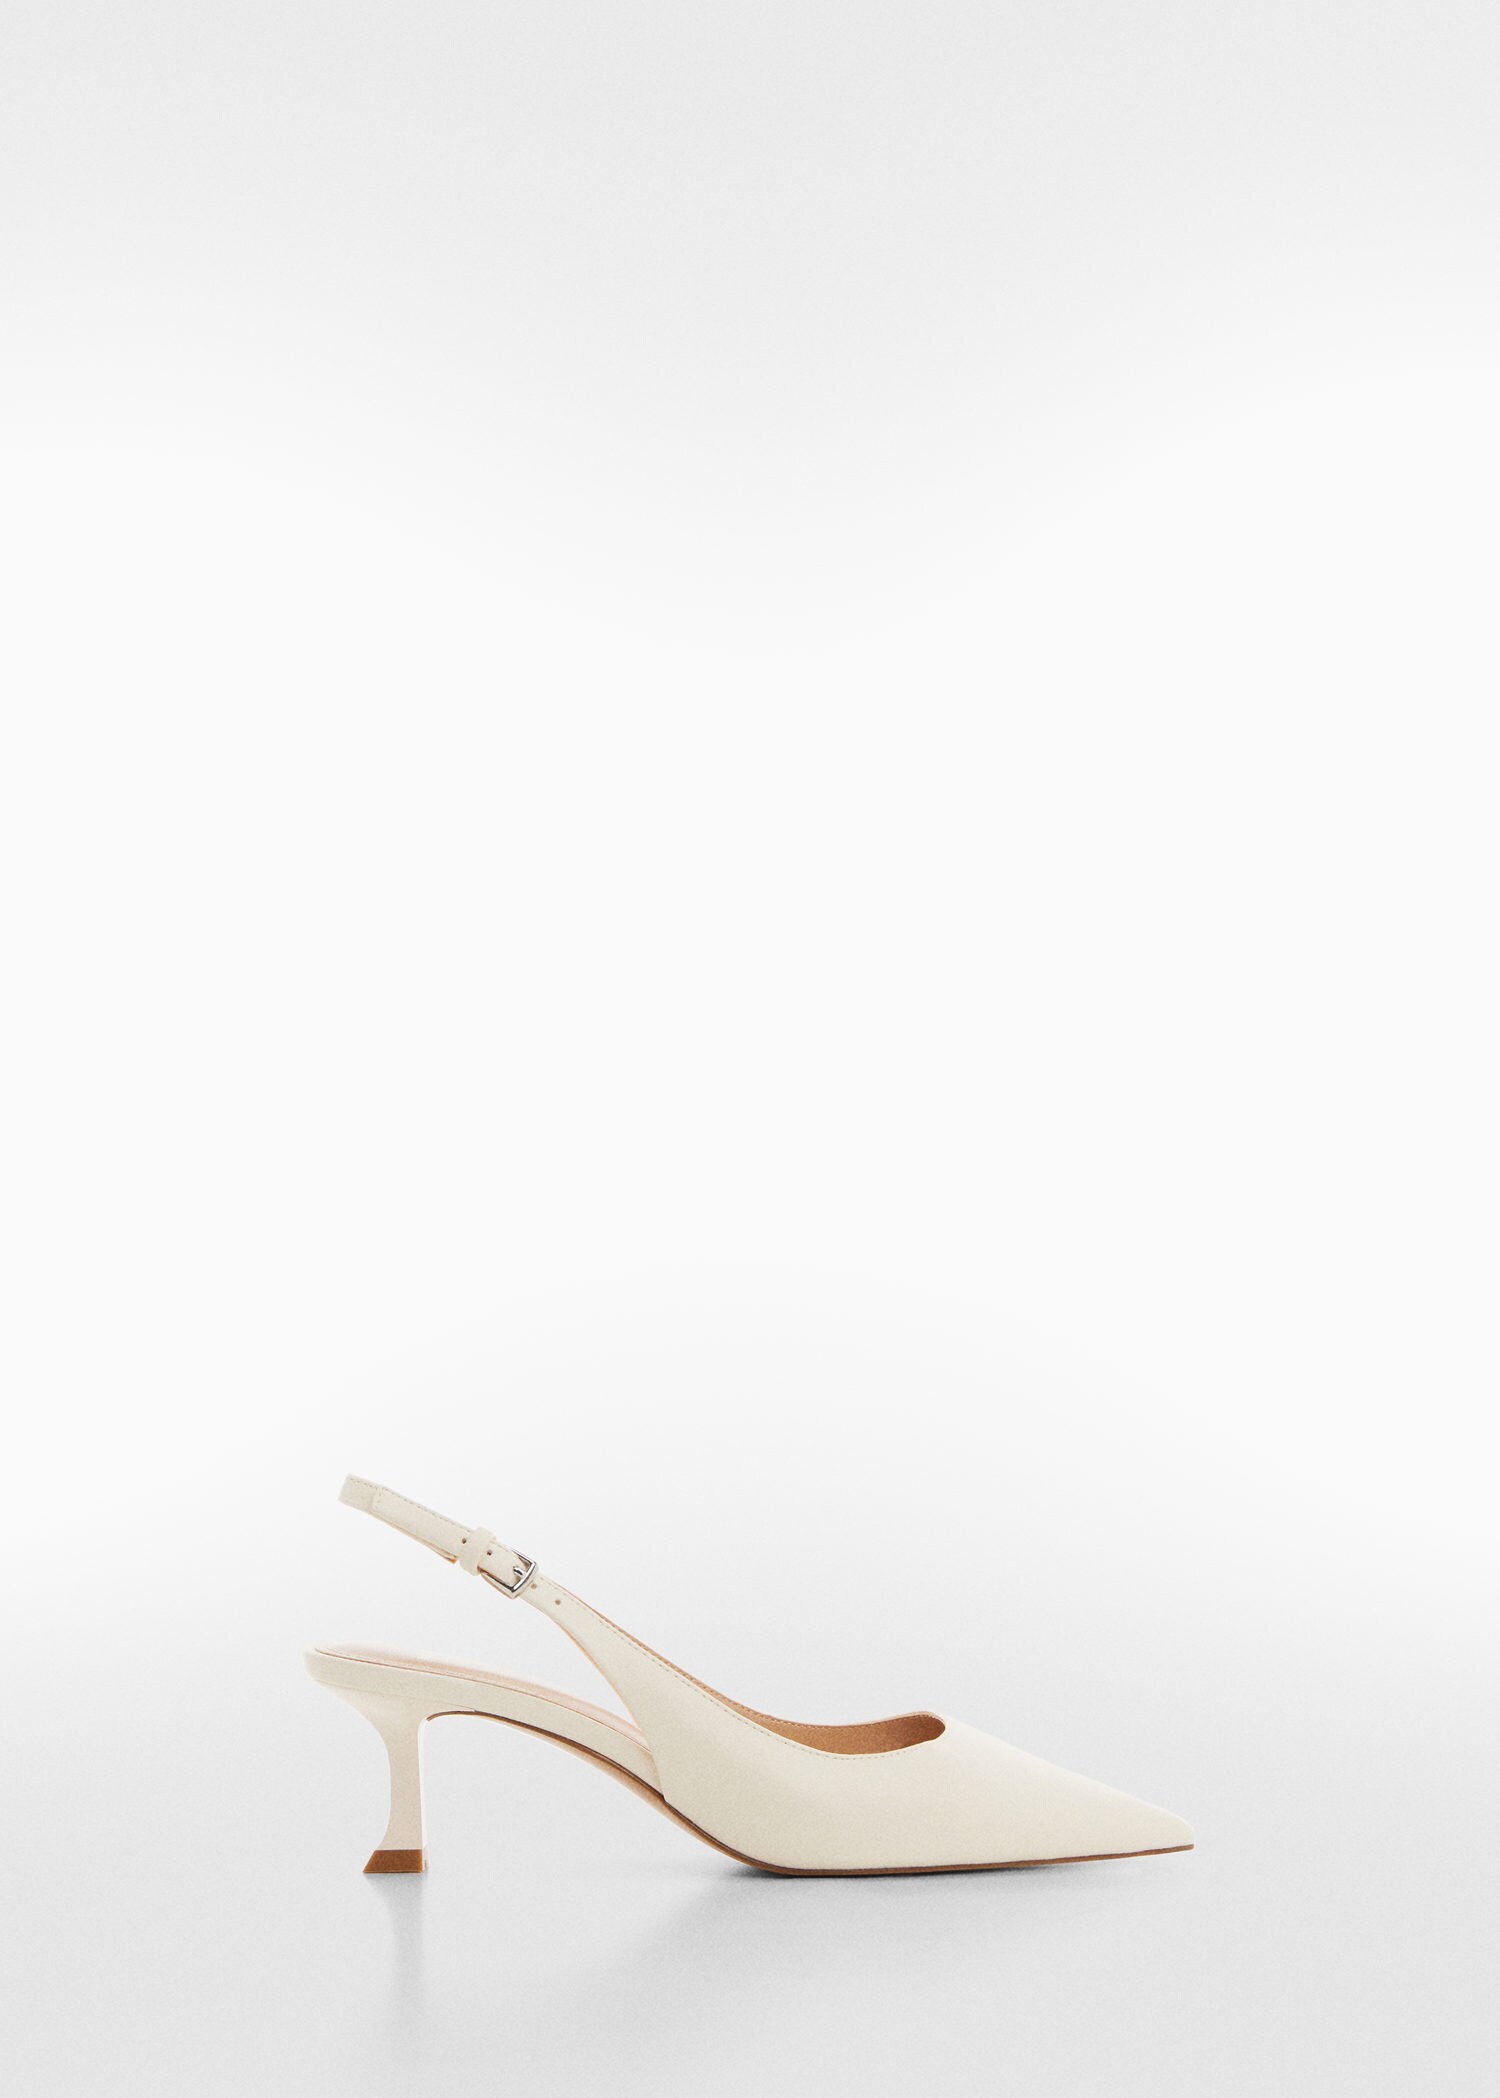 Chanel Shoes Slingback Pumps, White Patent, Size 40.5, New in Box WA001 -  Julia Rose Boston | Shop